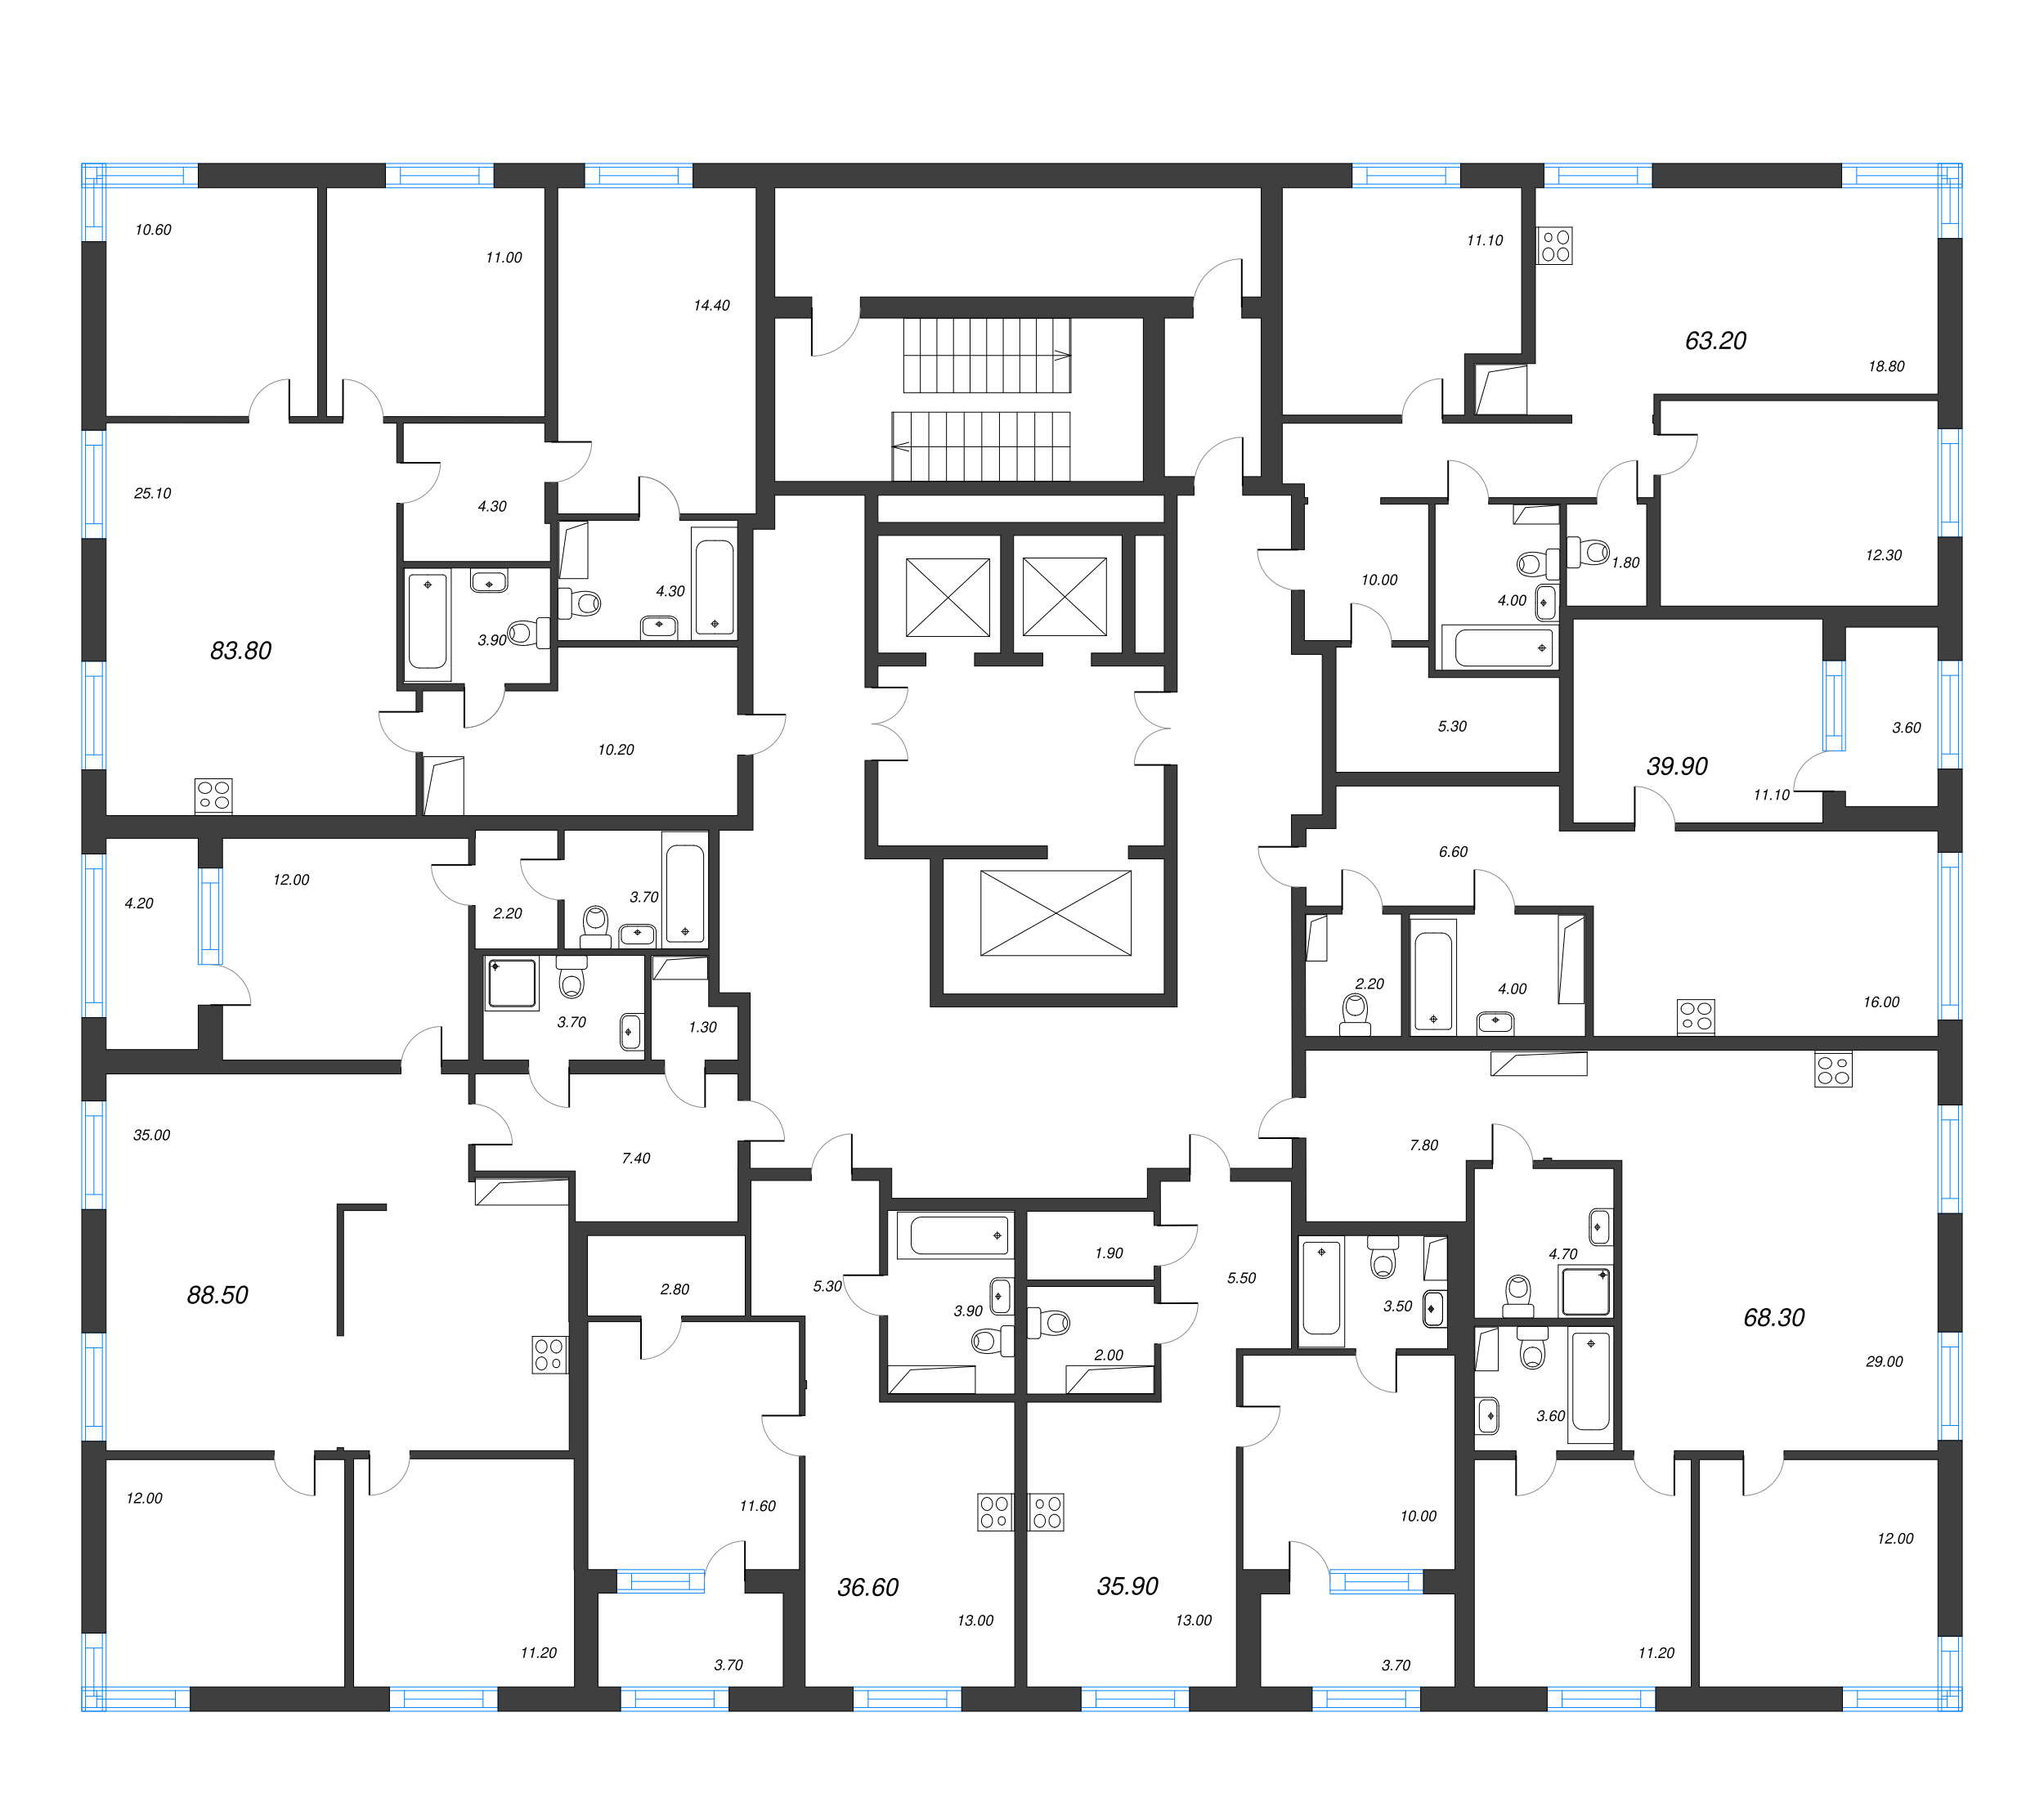 3-комнатная (Евро) квартира, 68.3 м² - планировка этажа